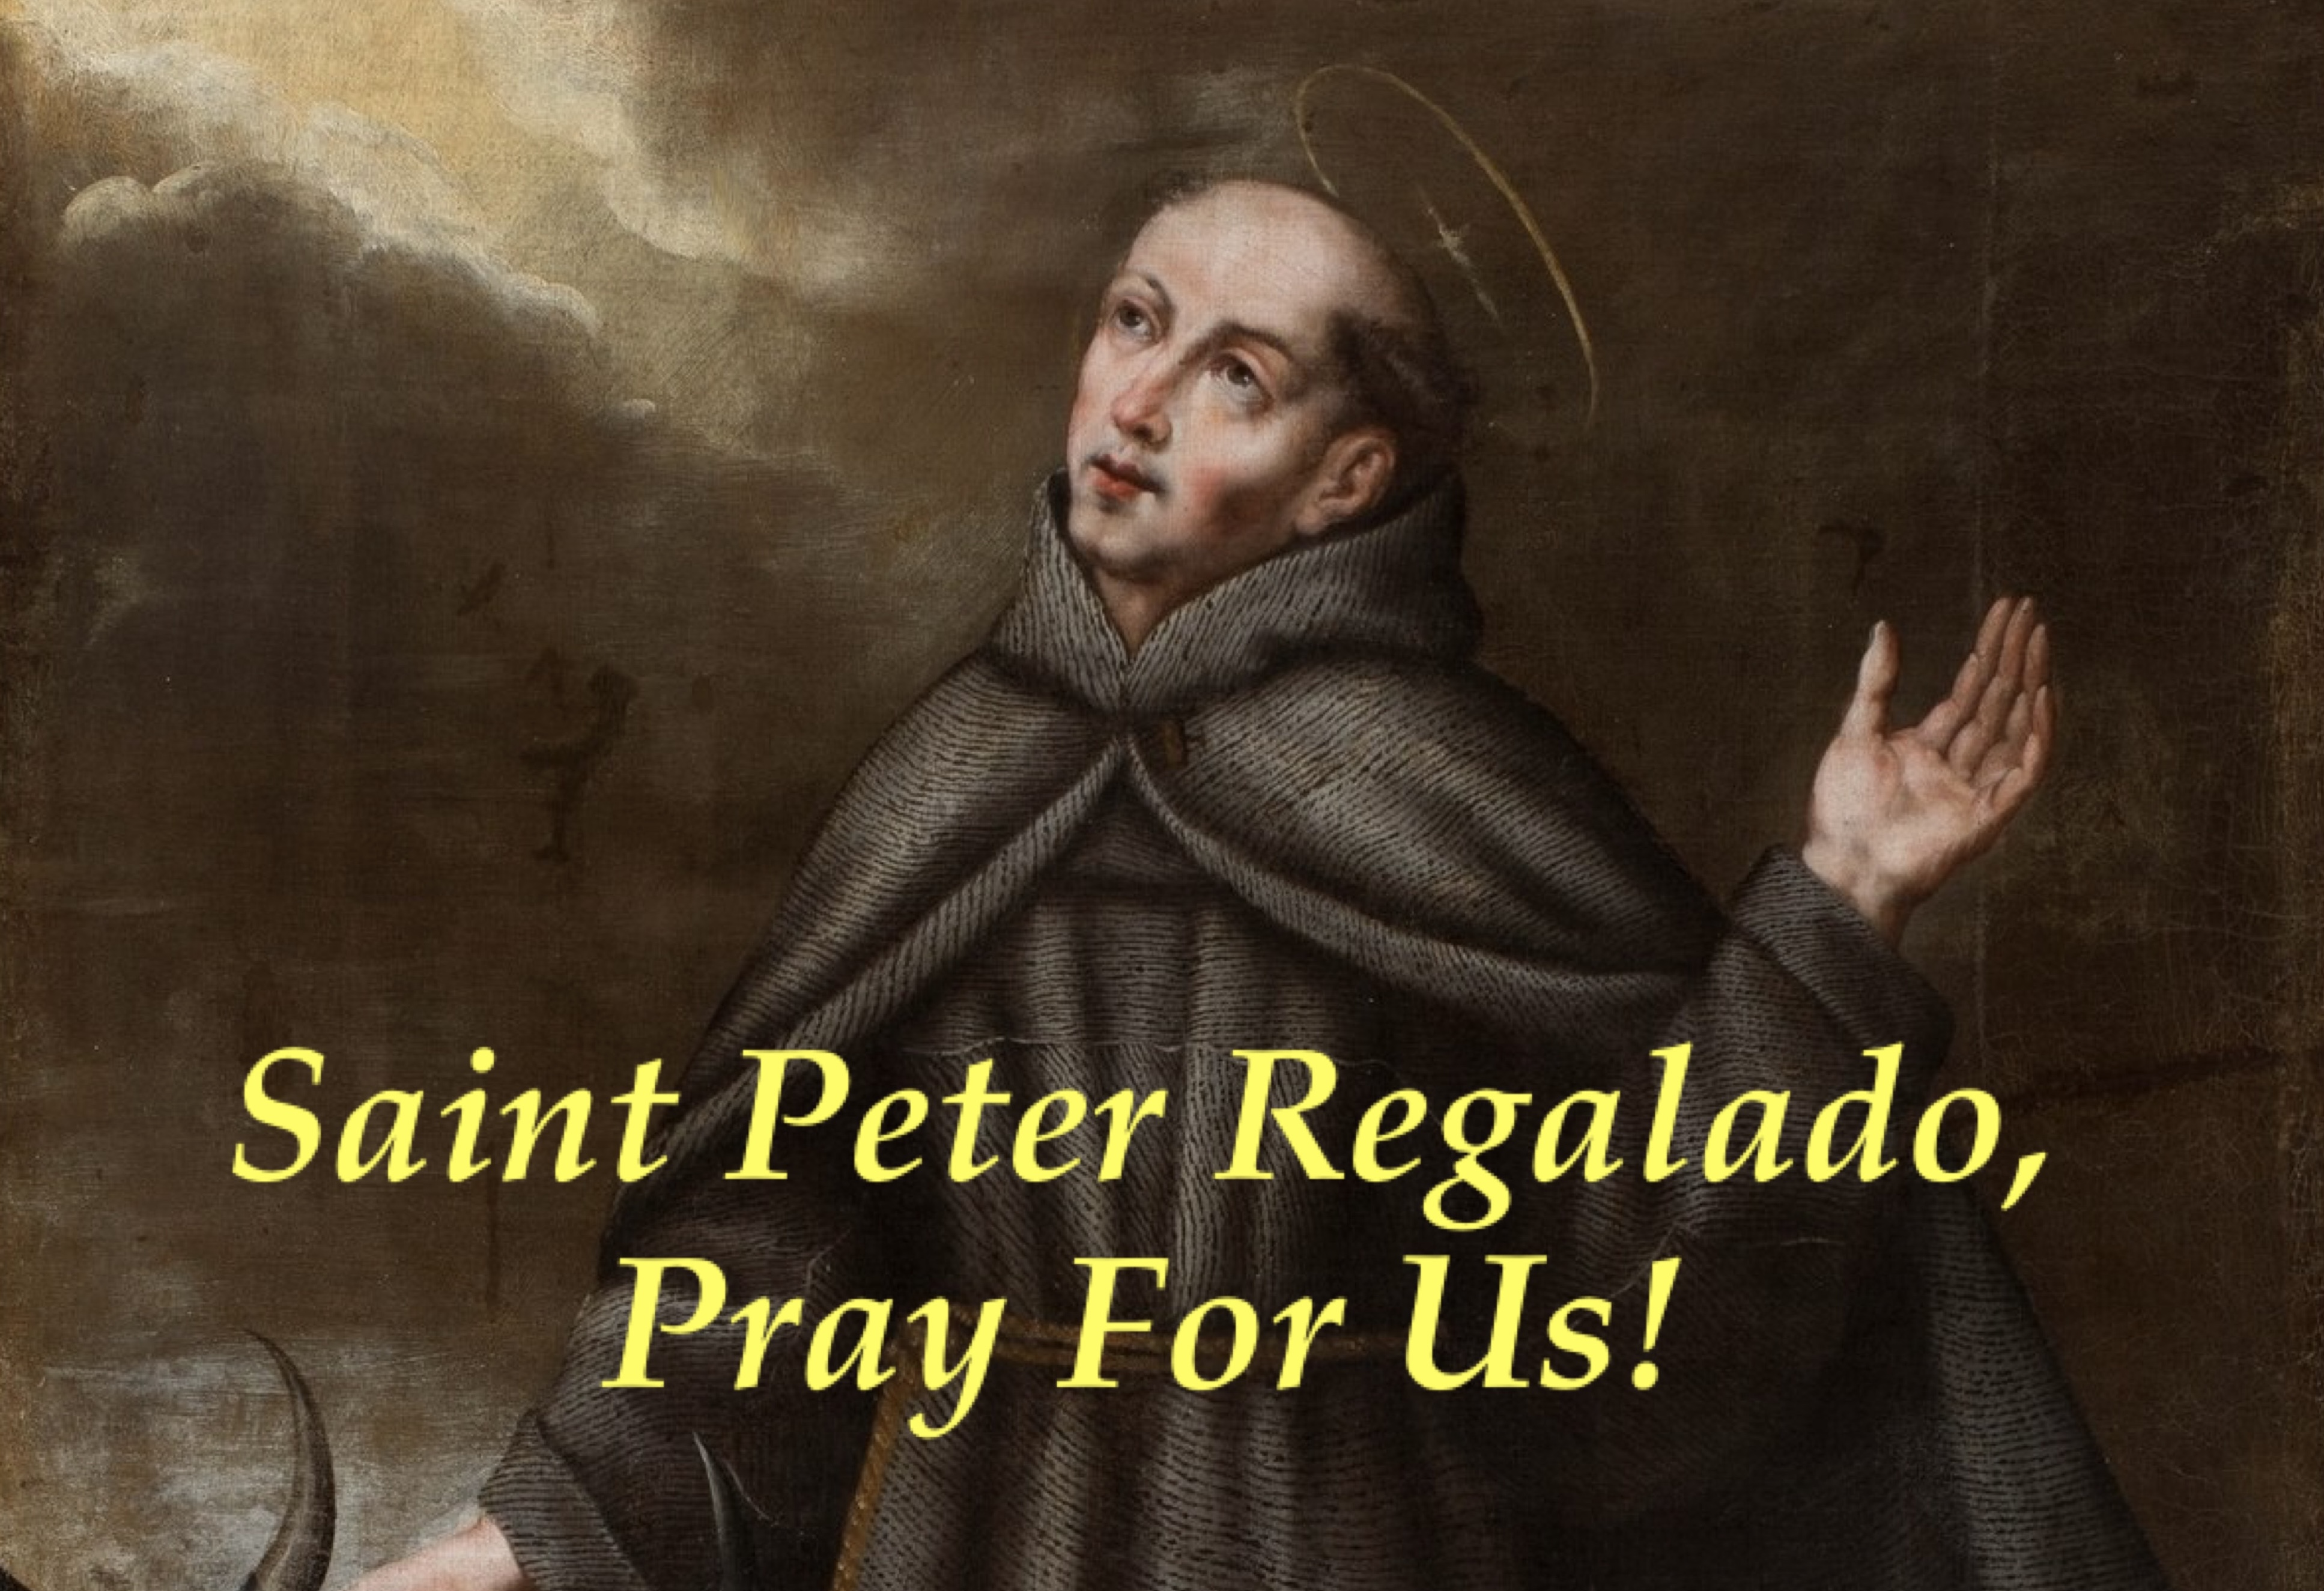 30th March - Saint Peter Regalado